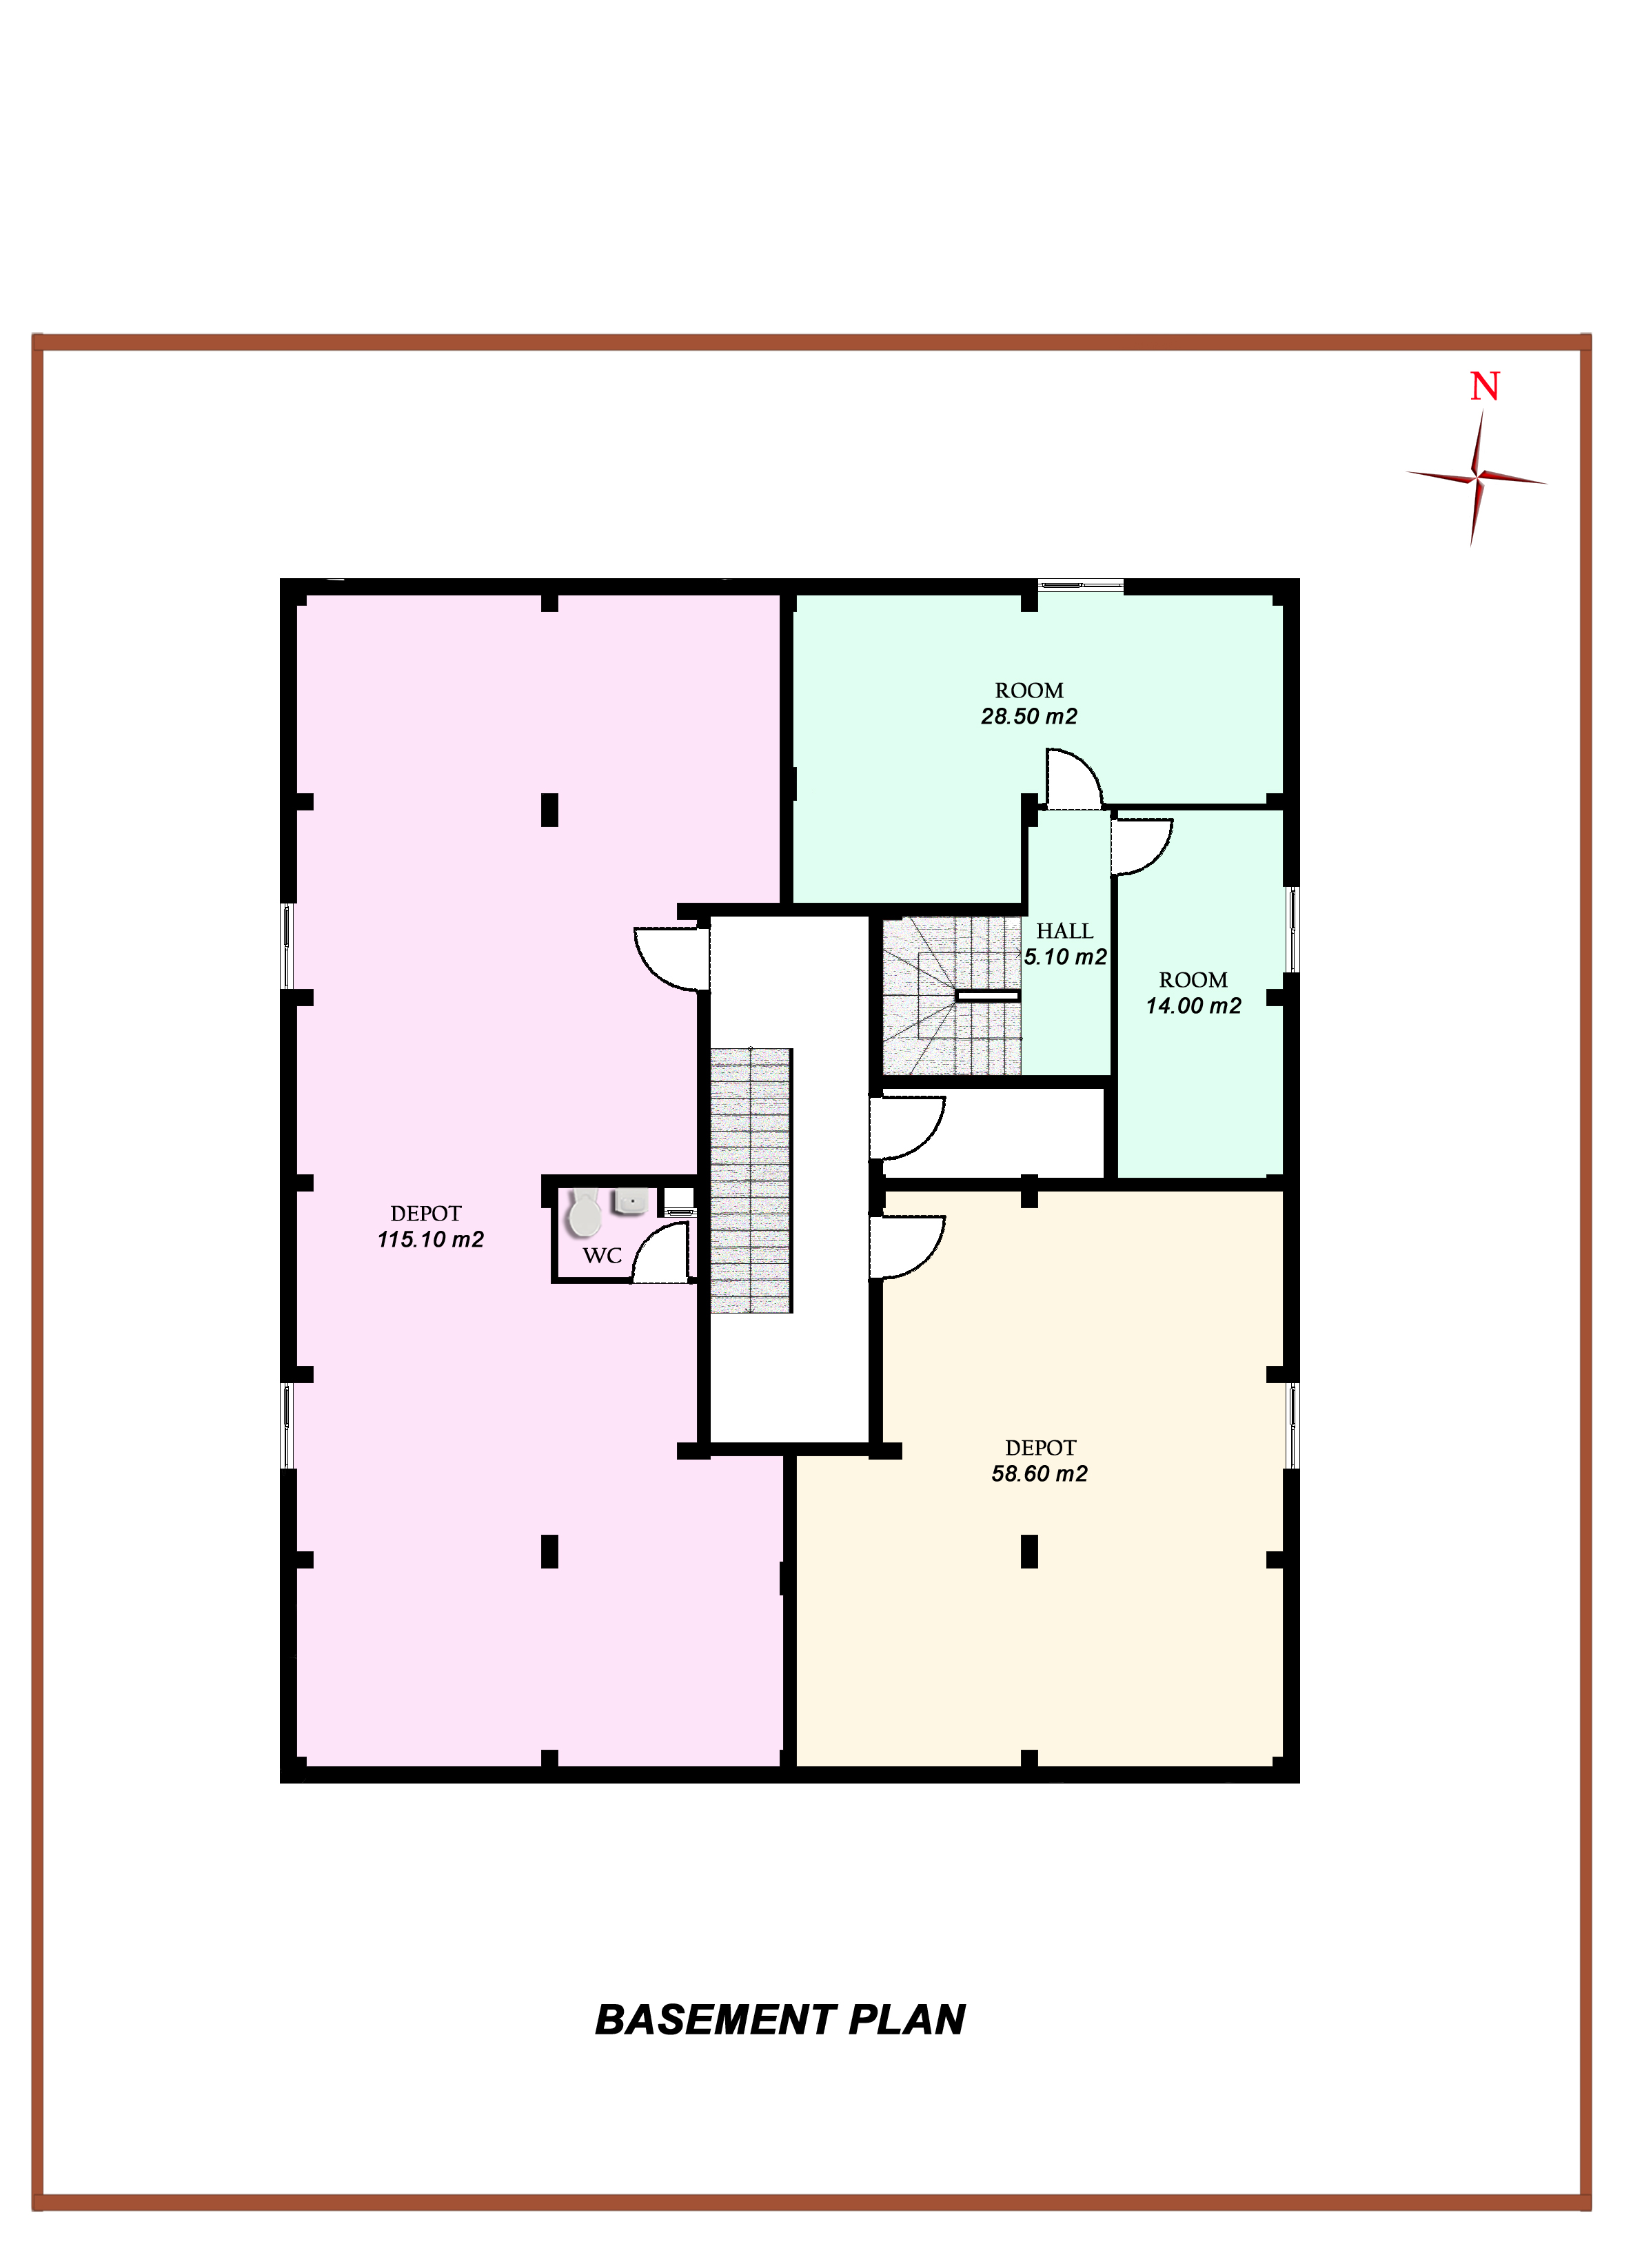 Basement Floor Plan Ideas - Image to u